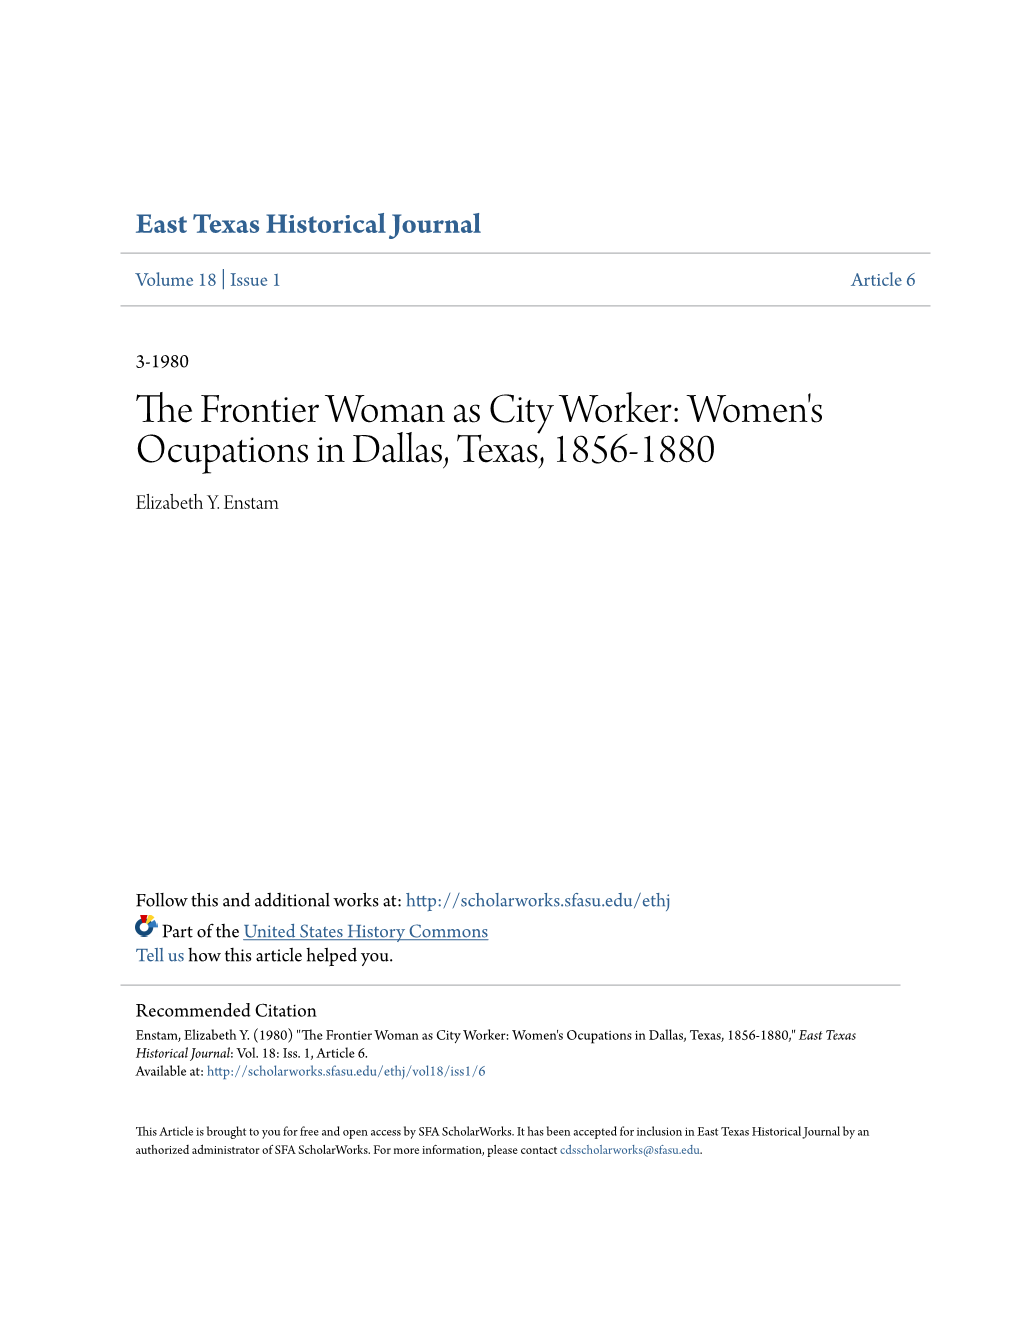 Women's Ocupations in Dallas, Texas, 1856-1880 Elizabeth Y